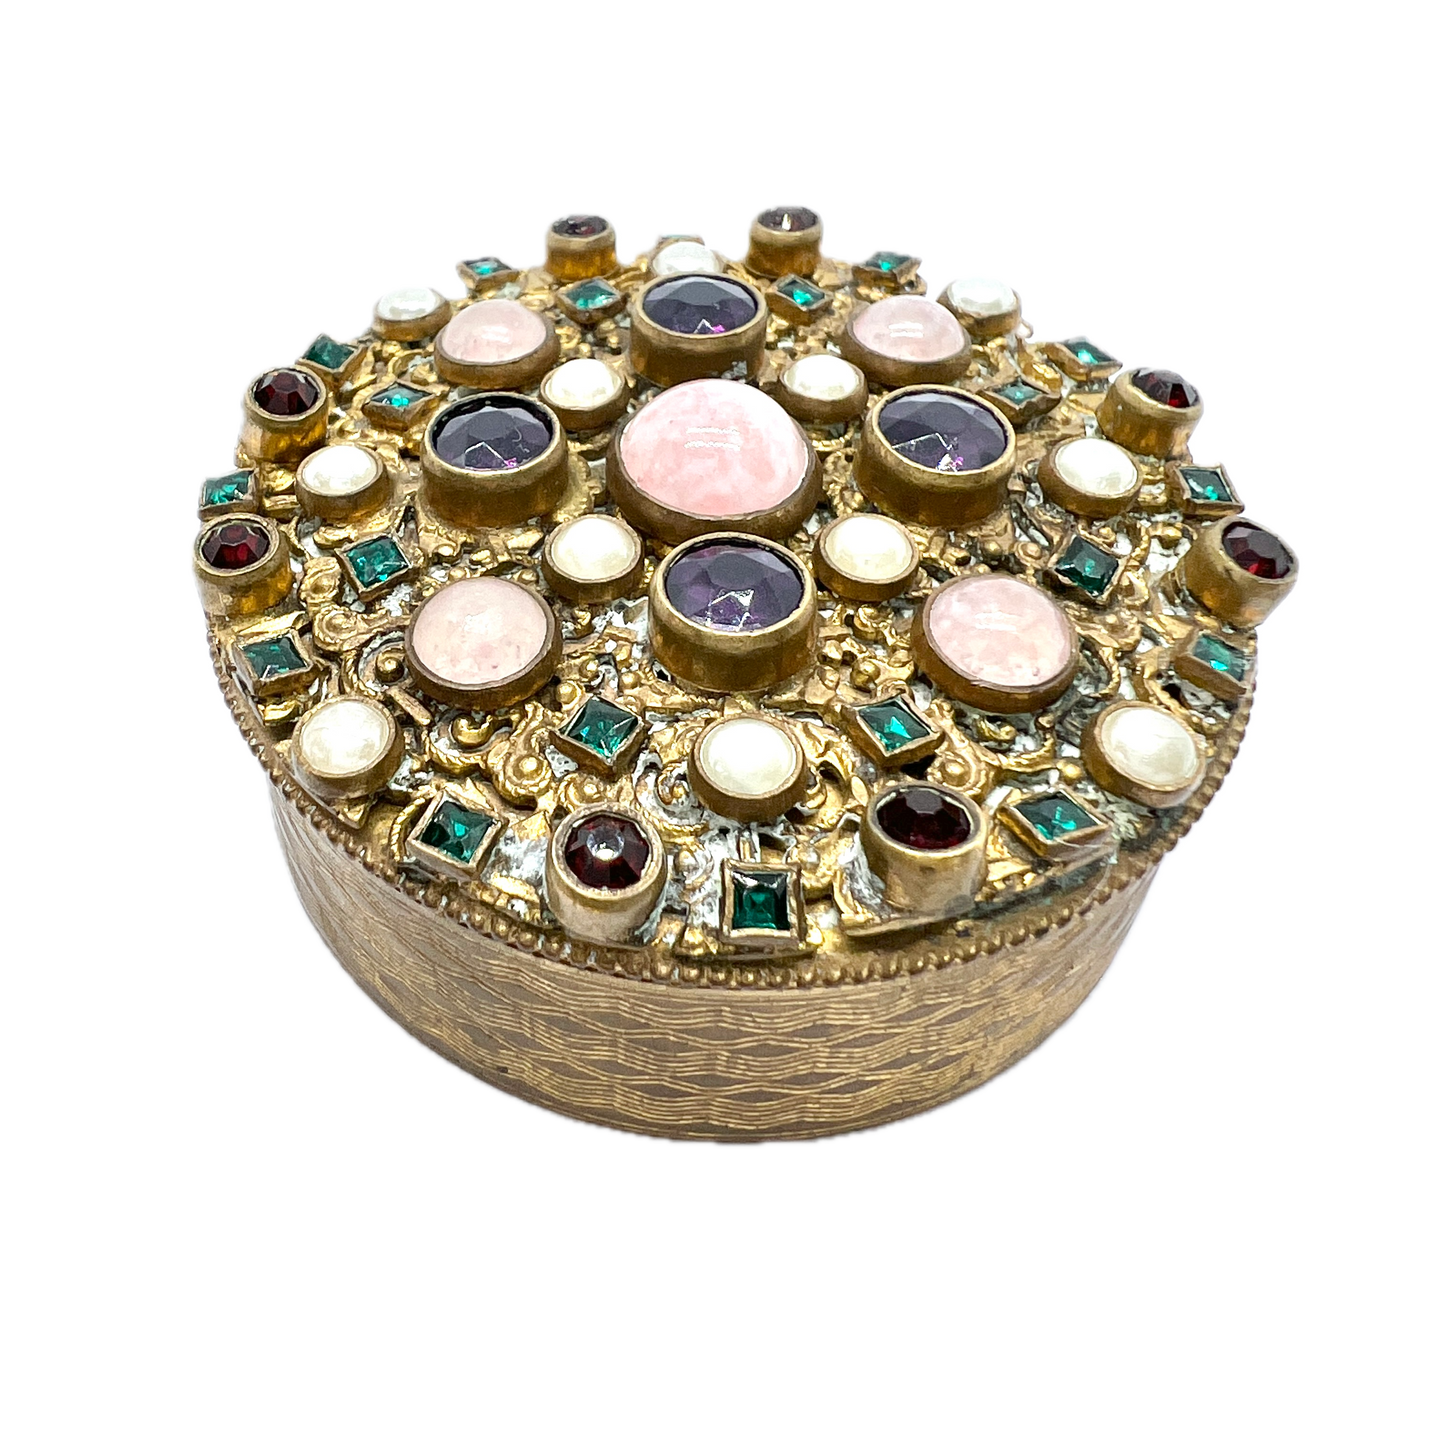 Early 1900s Antique Gilt Metal Jeweled Trinket Box.